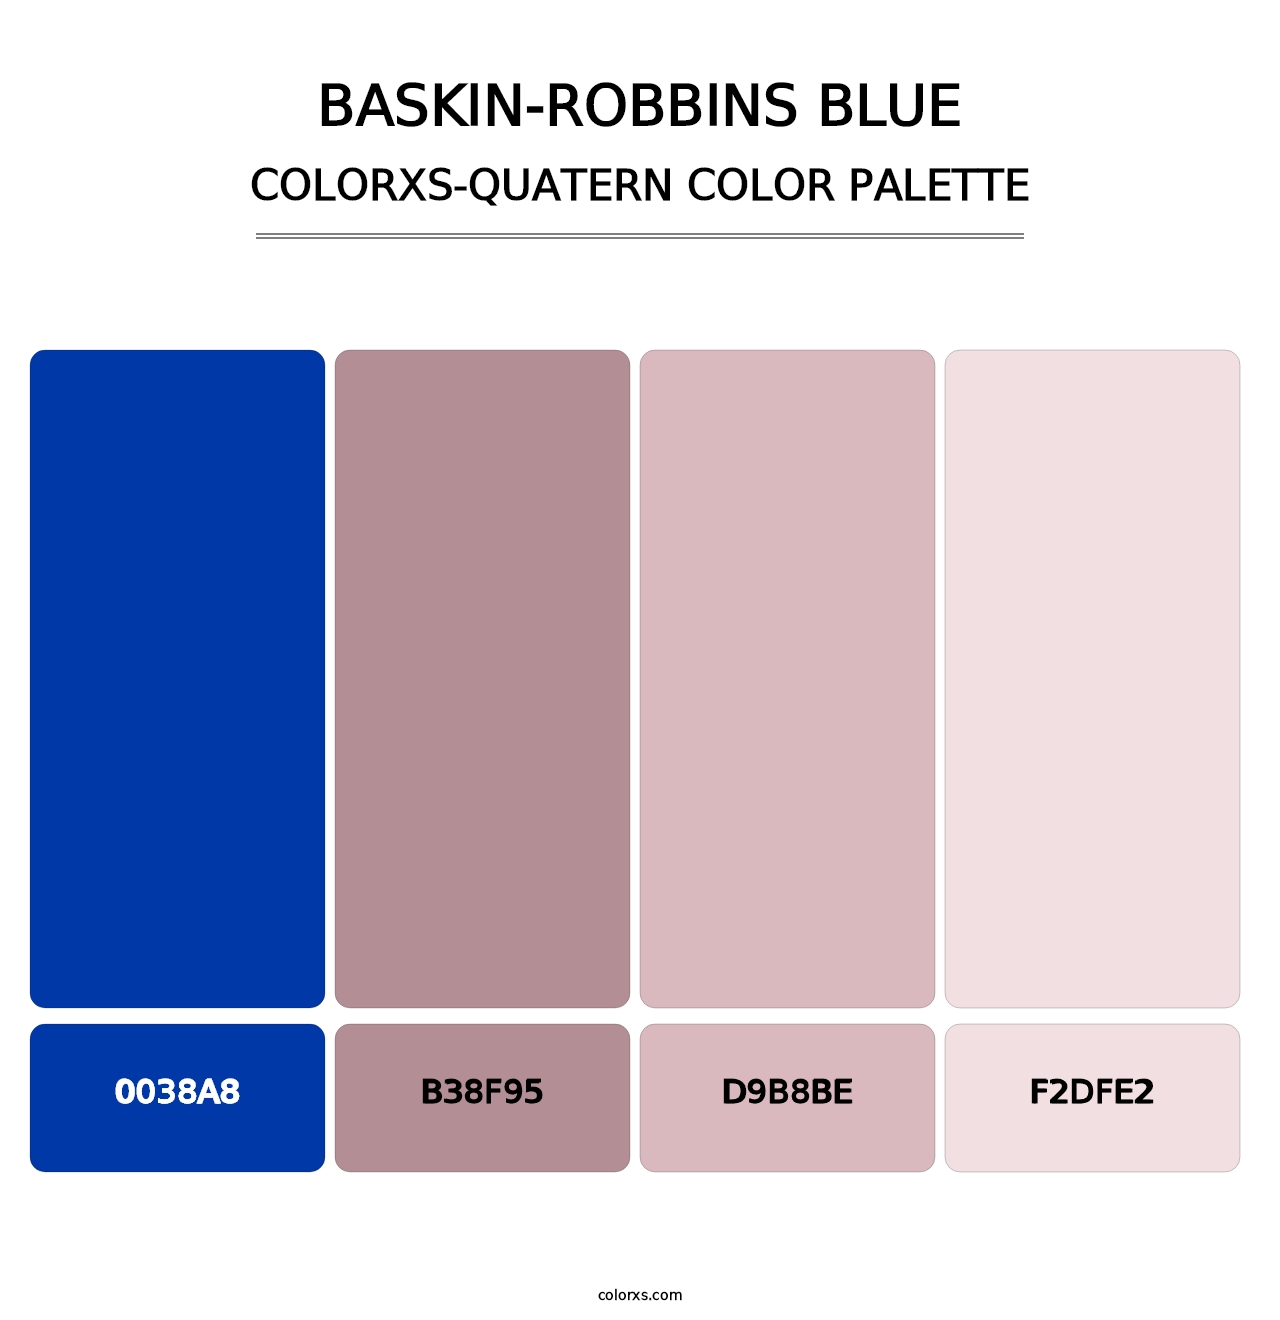 Baskin-Robbins Blue - Colorxs Quatern Palette